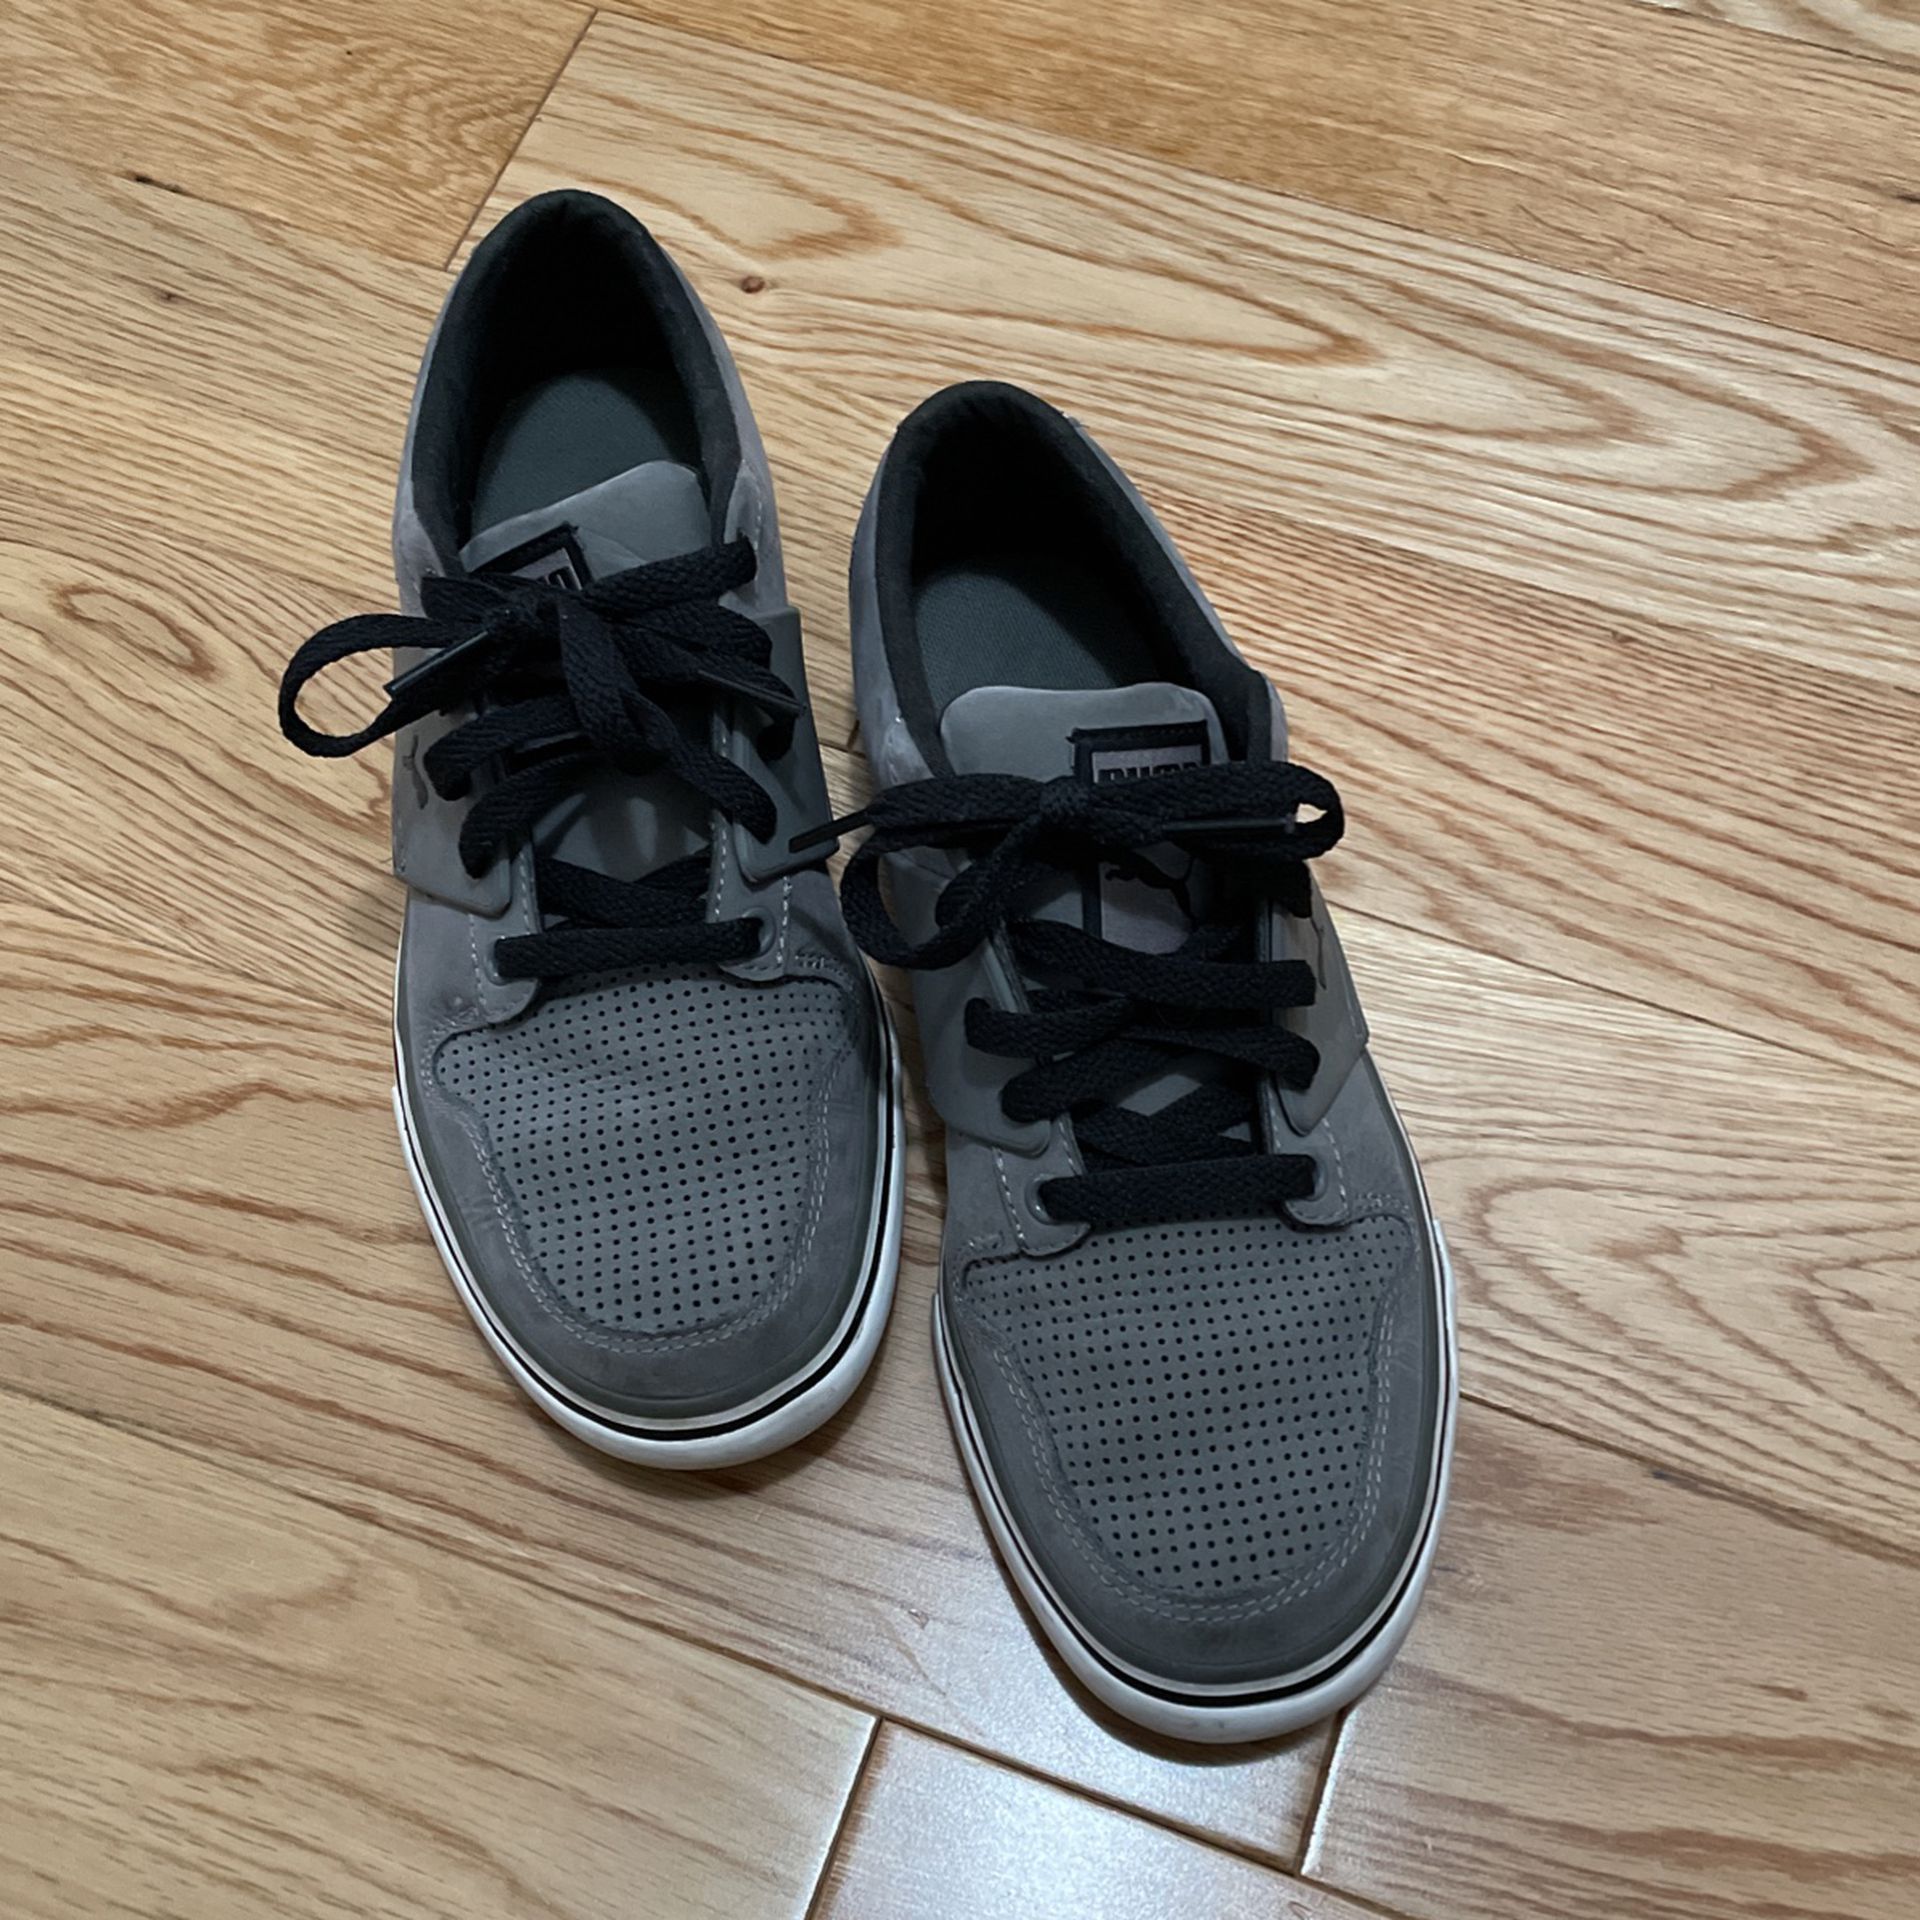 Boys Gray Puma Shoes - Size 5 Lightly Worn 